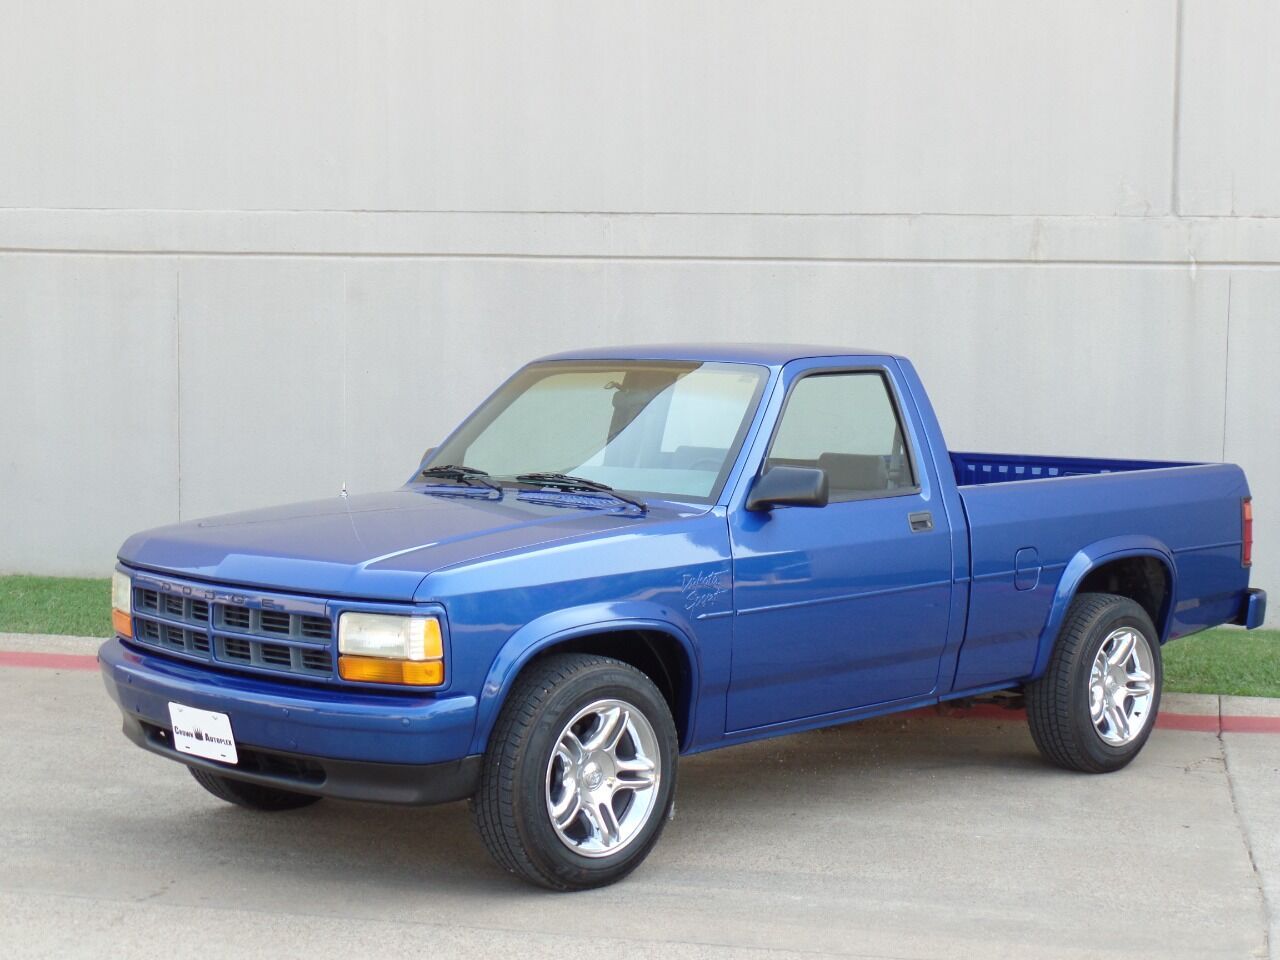 comerciante Descuidado primero 1994 Dodge Dakota For Sale - Carsforsale.com®